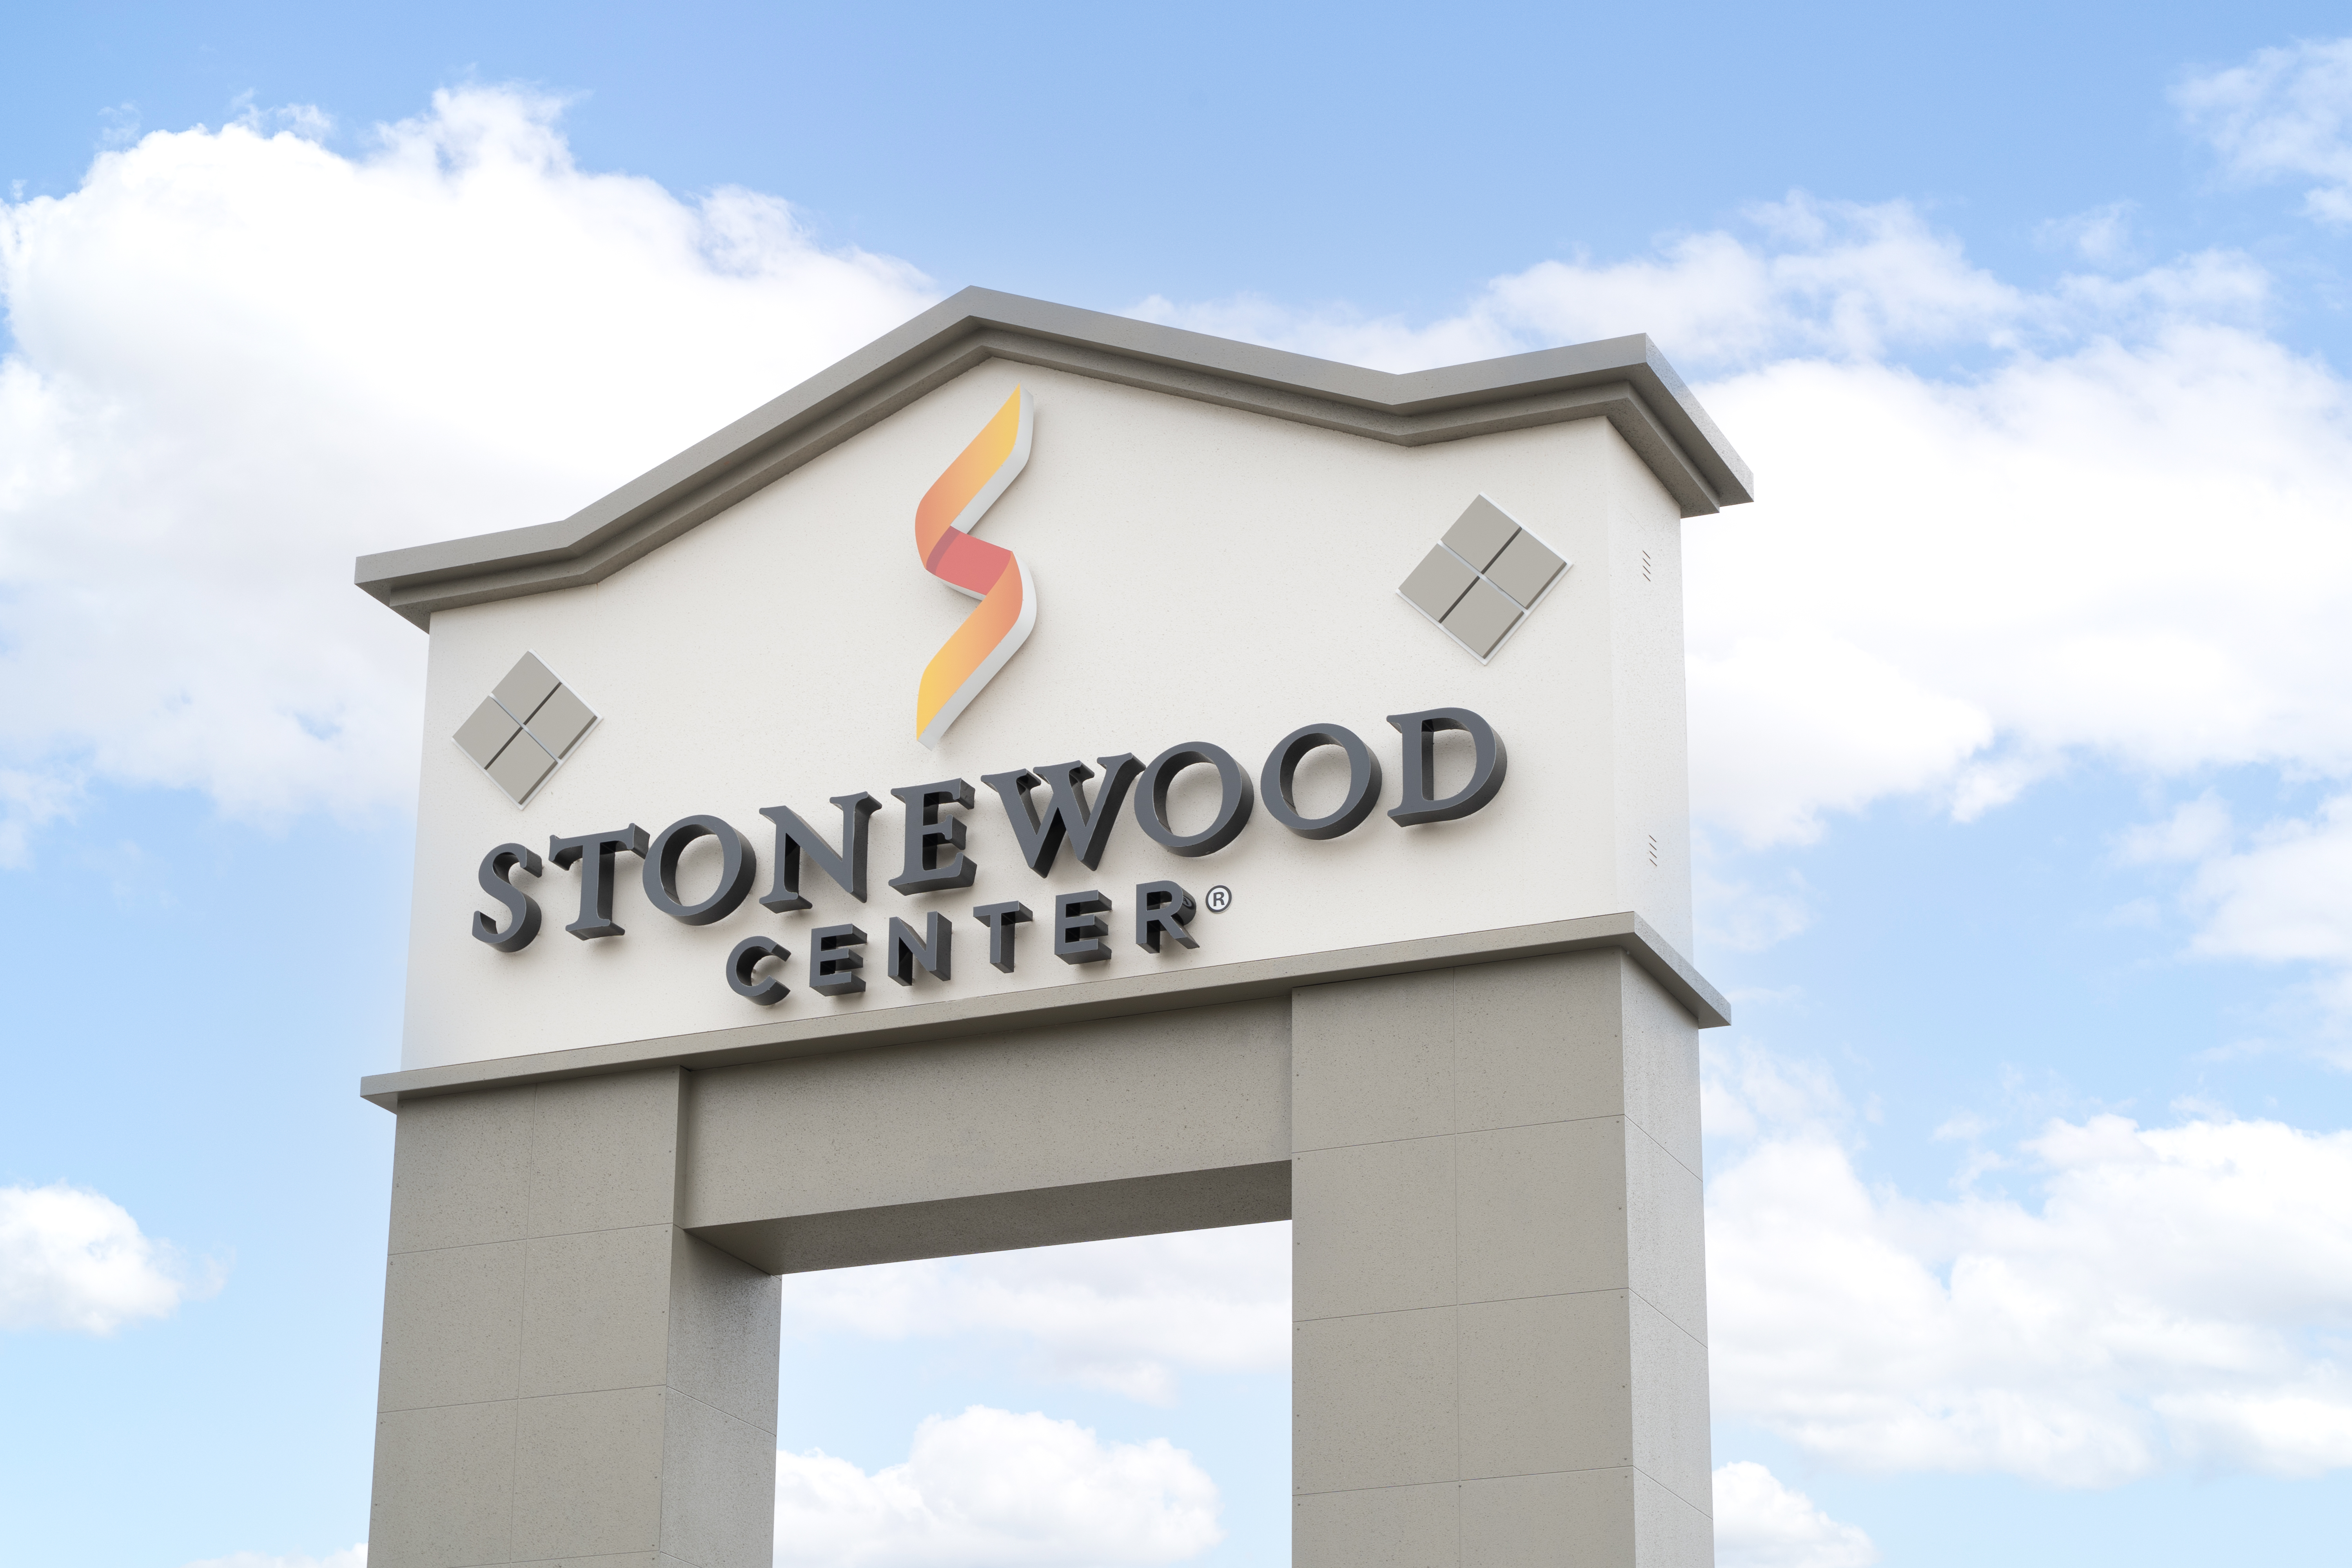 Stonewood Center's exterior signage